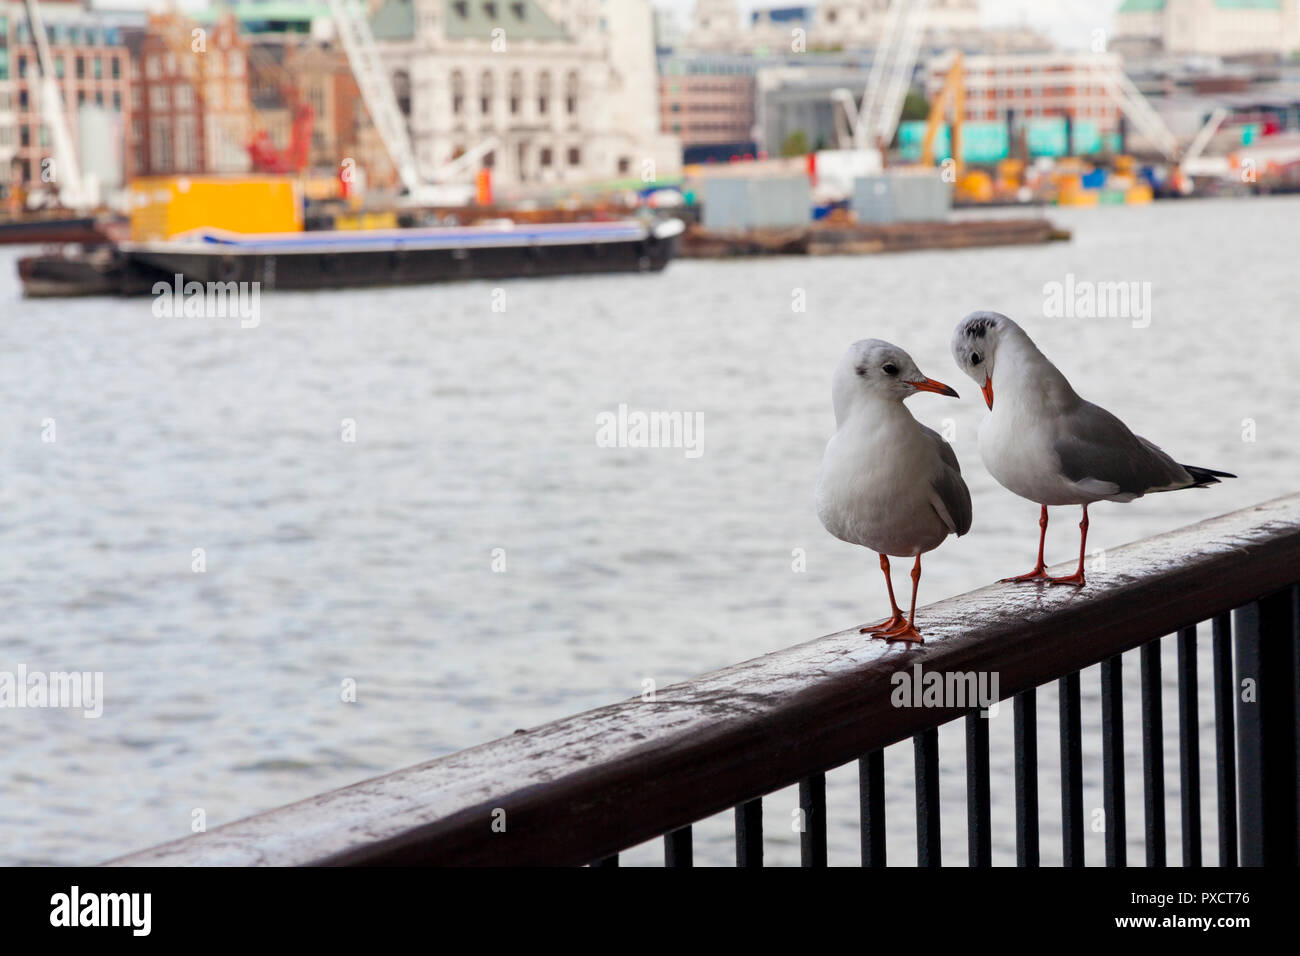 Black-headed gulls, Larus ridibundus, on a handrail next to the River Thames, central London, UK, autumn. Stock Photo